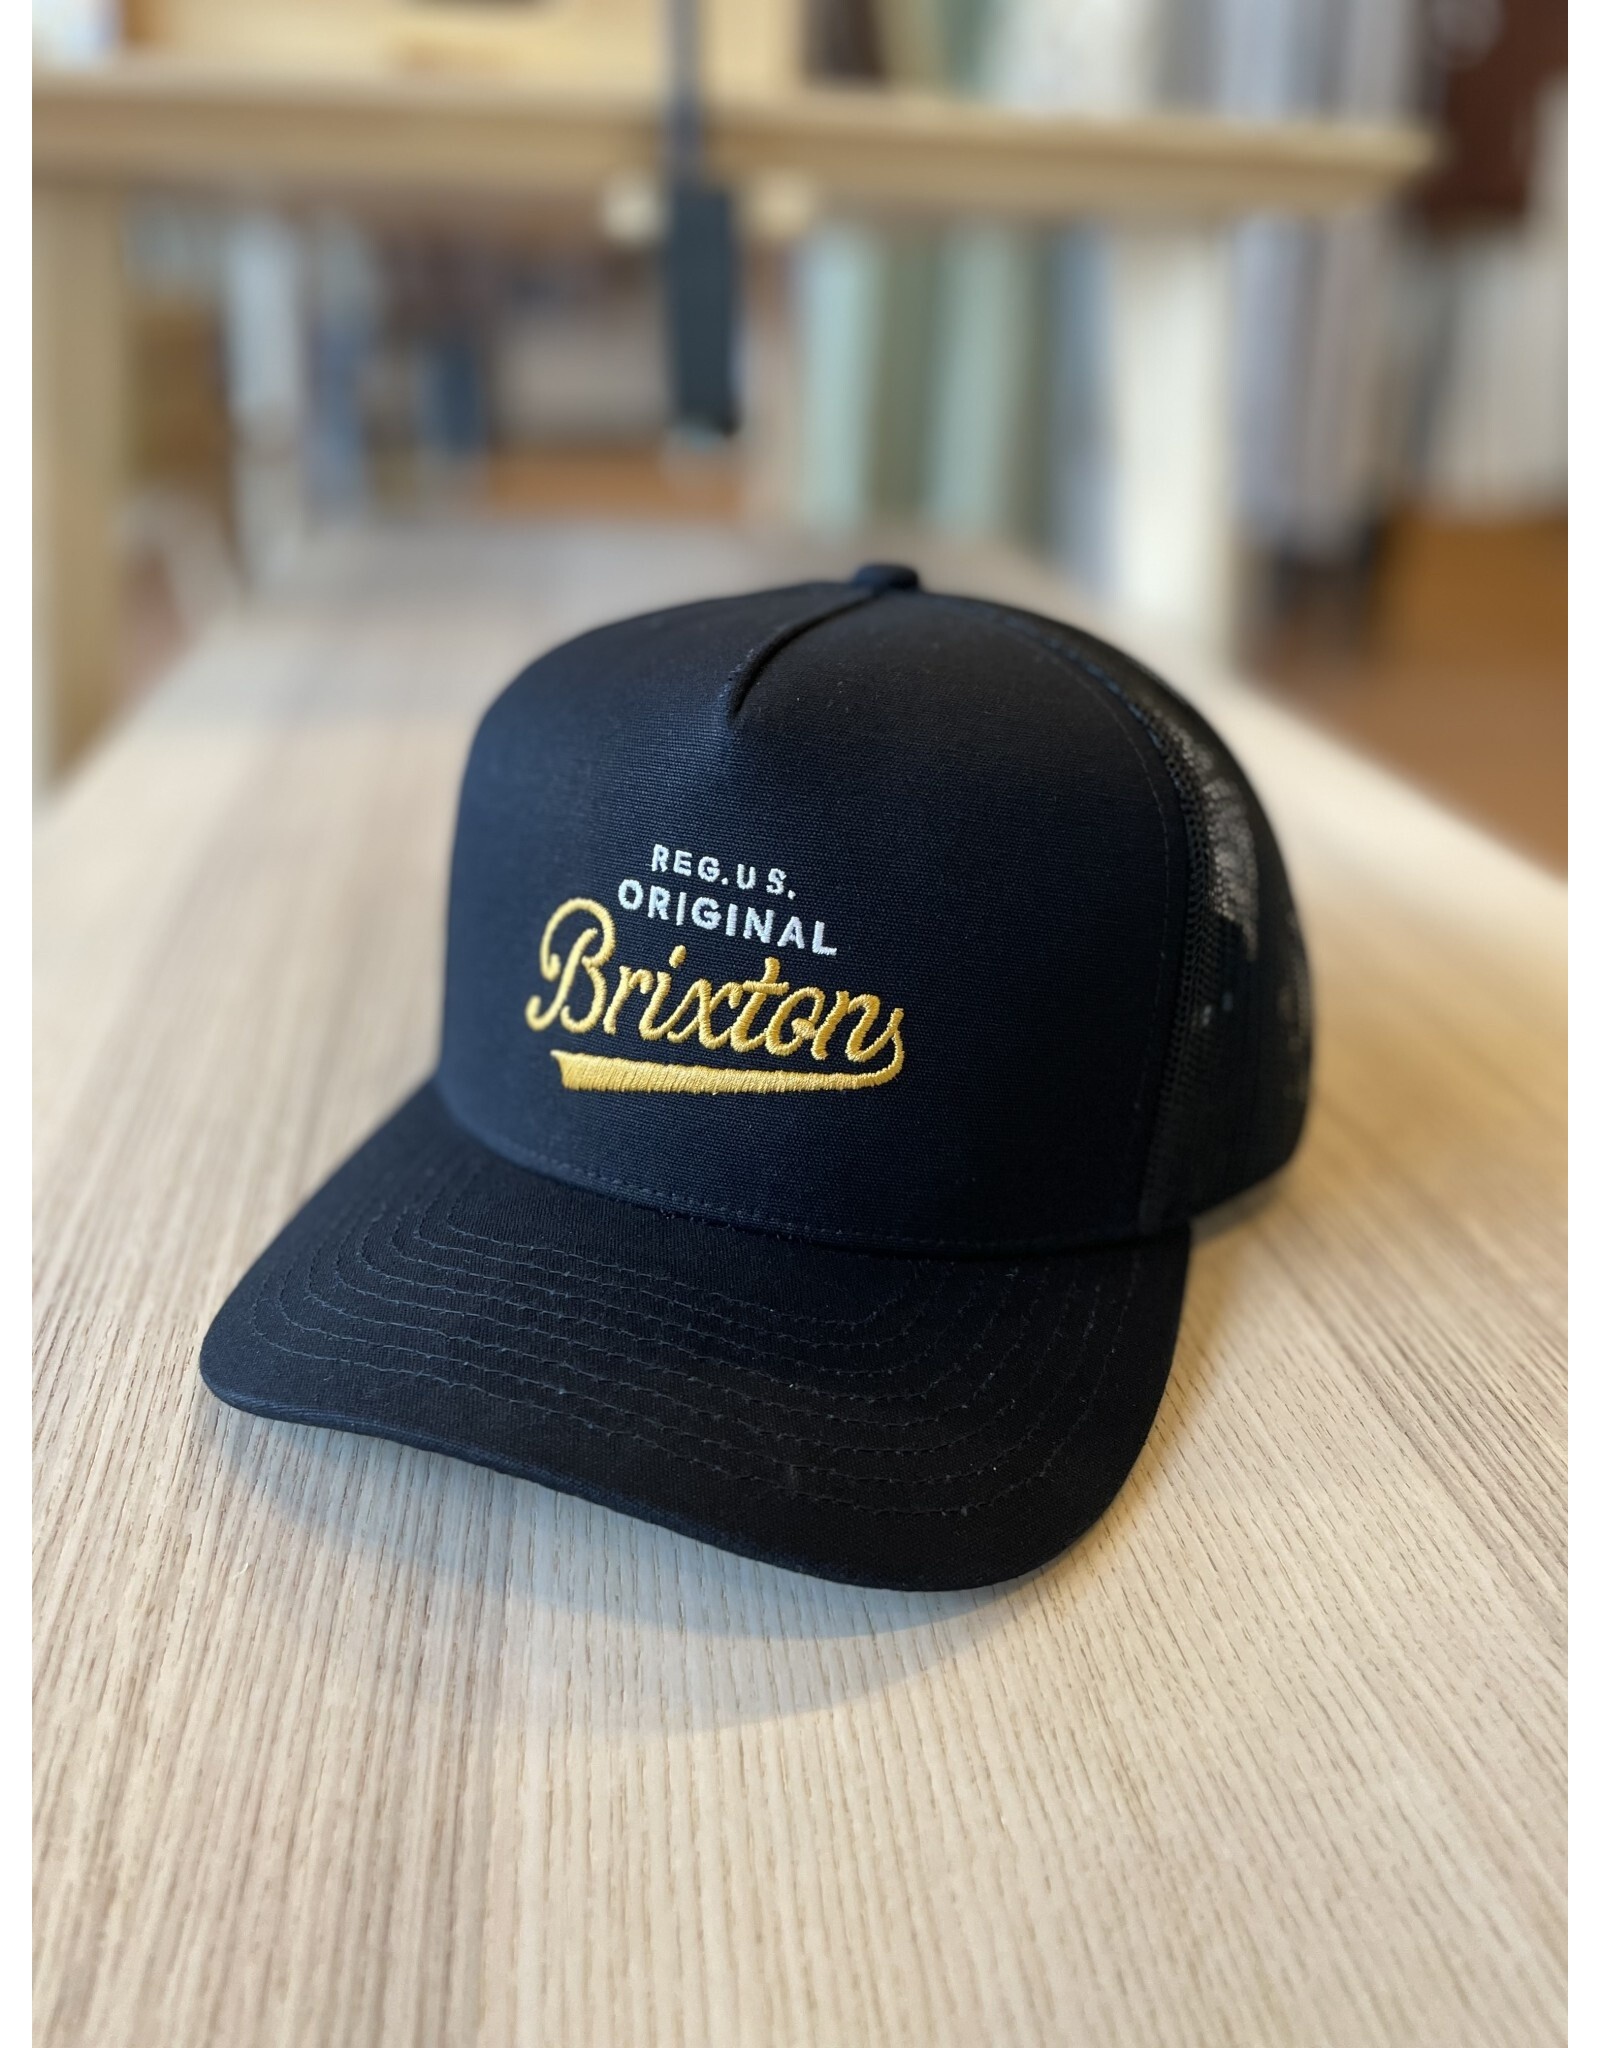 Brixton - Trucker / Black